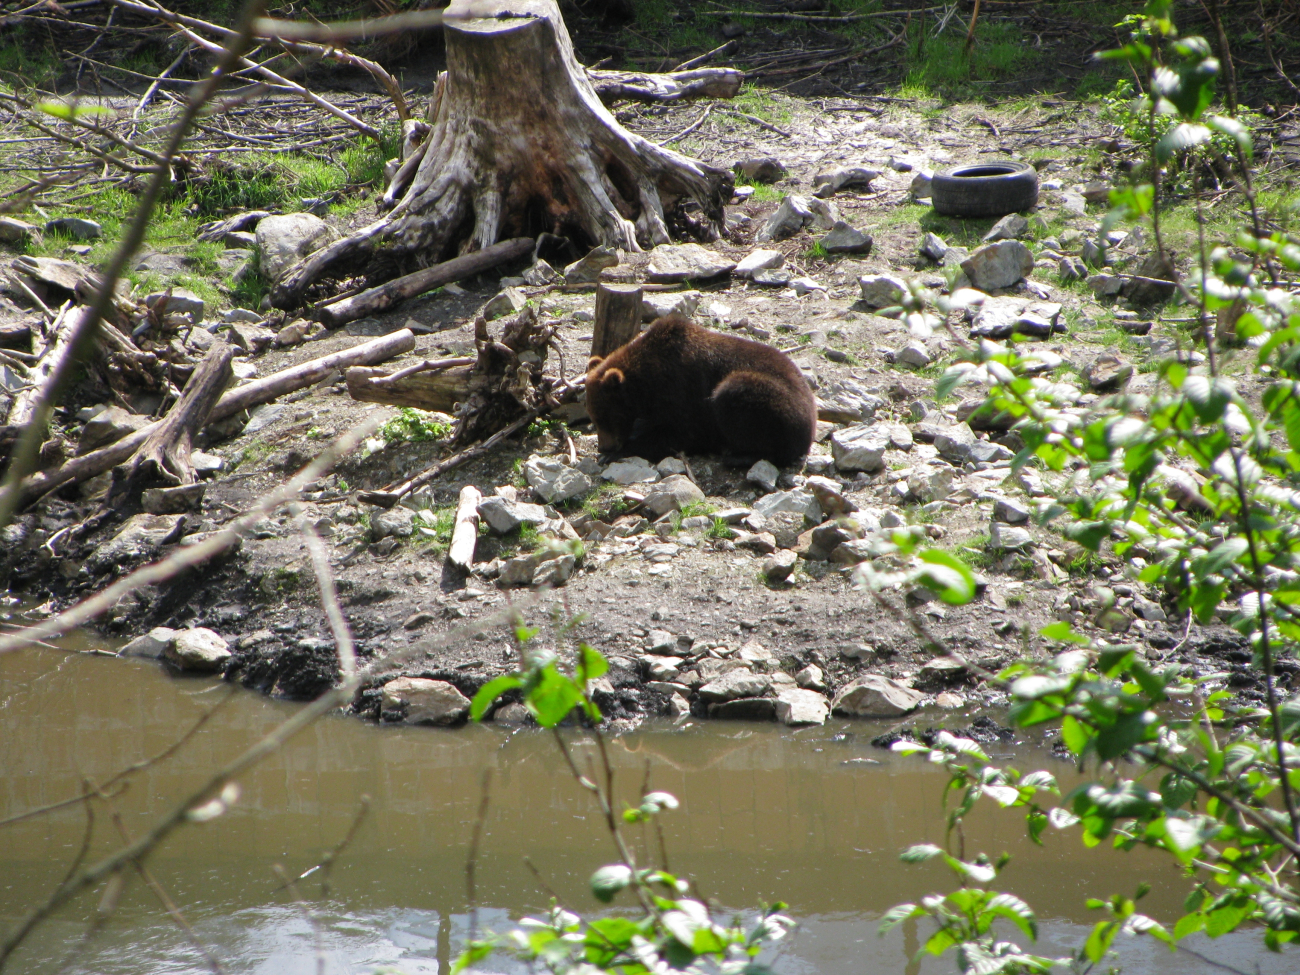 Brown bear at water's edge